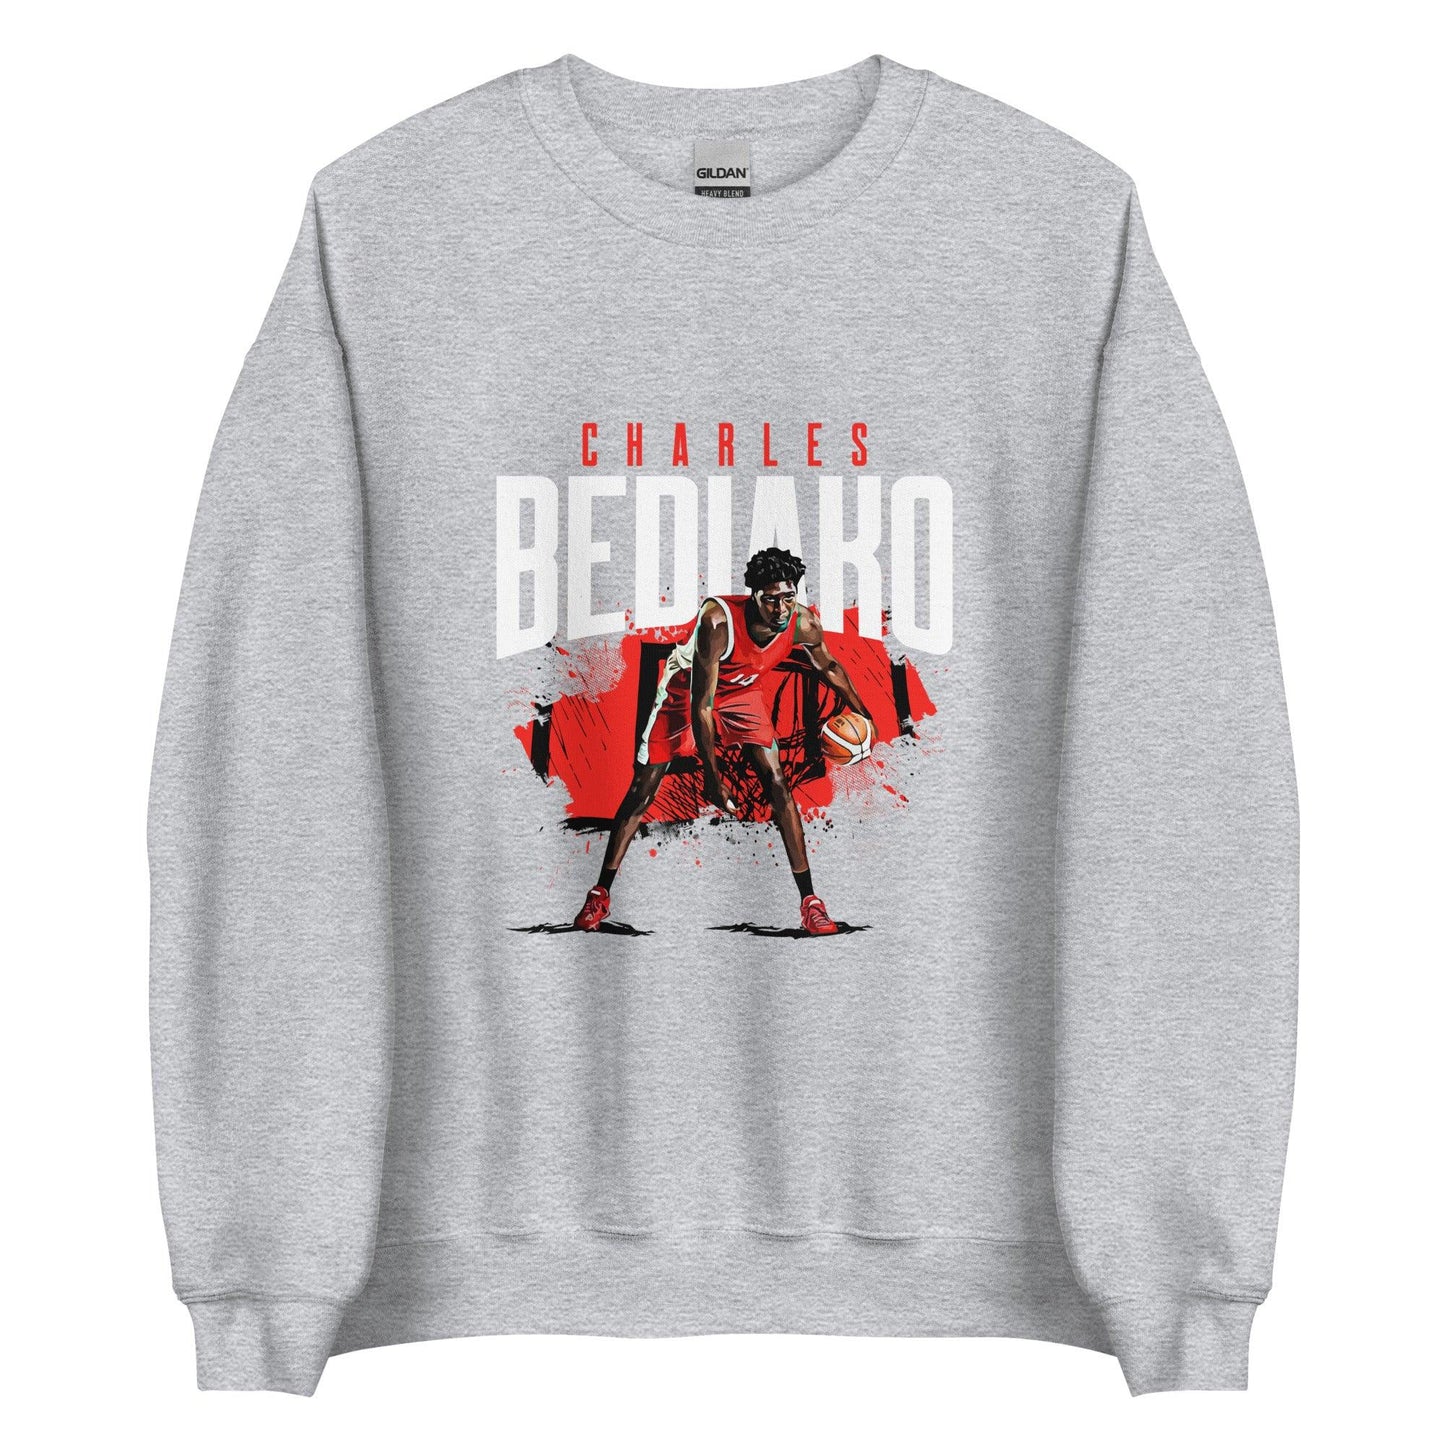 Charles Bediako "Crossover" Sweatshirt - Fan Arch